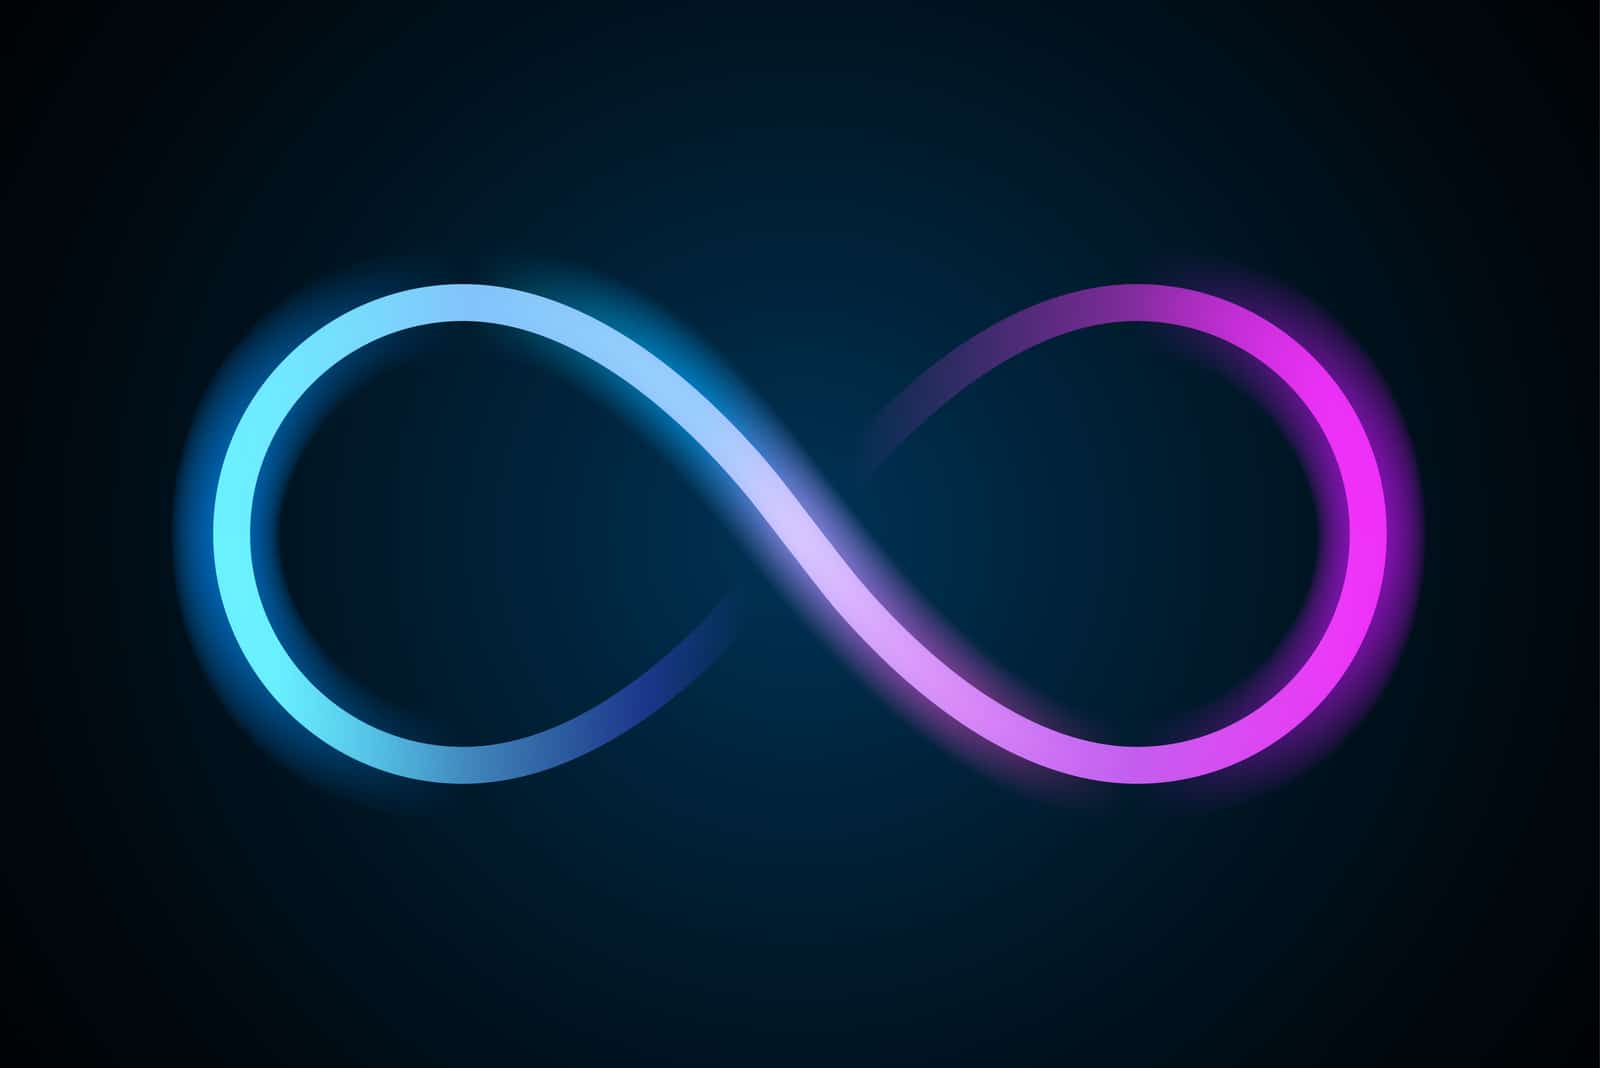 Infinity symbol on blue background